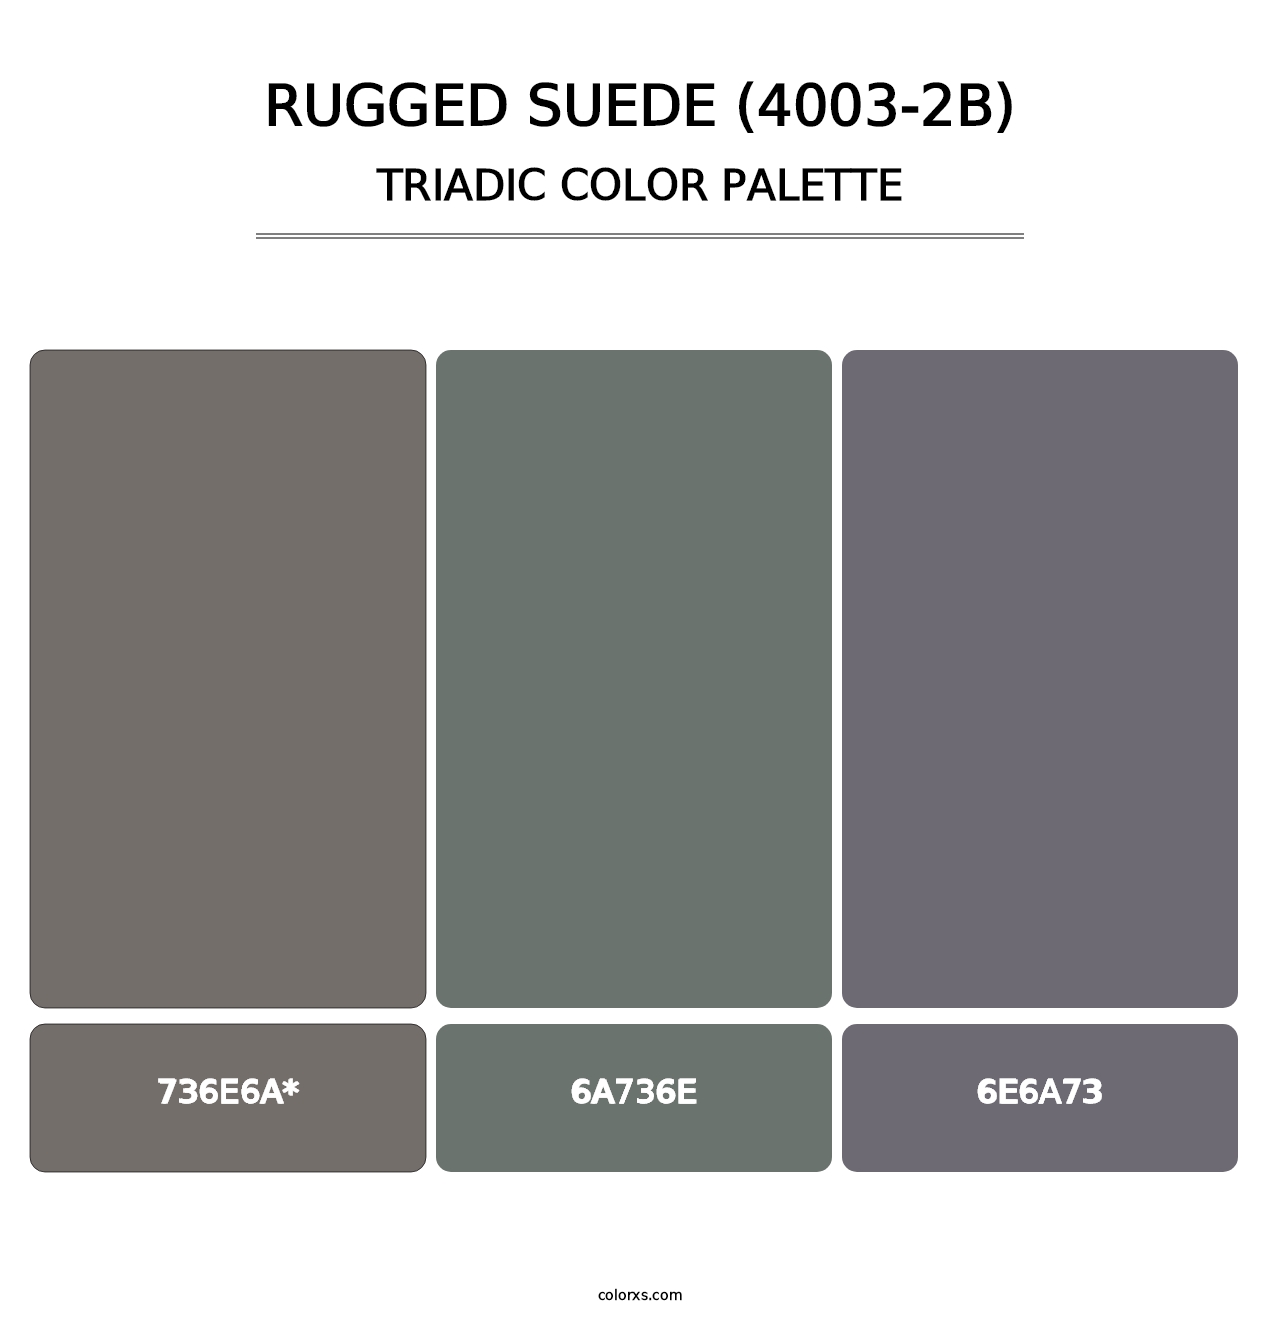 Rugged Suede (4003-2B) - Triadic Color Palette